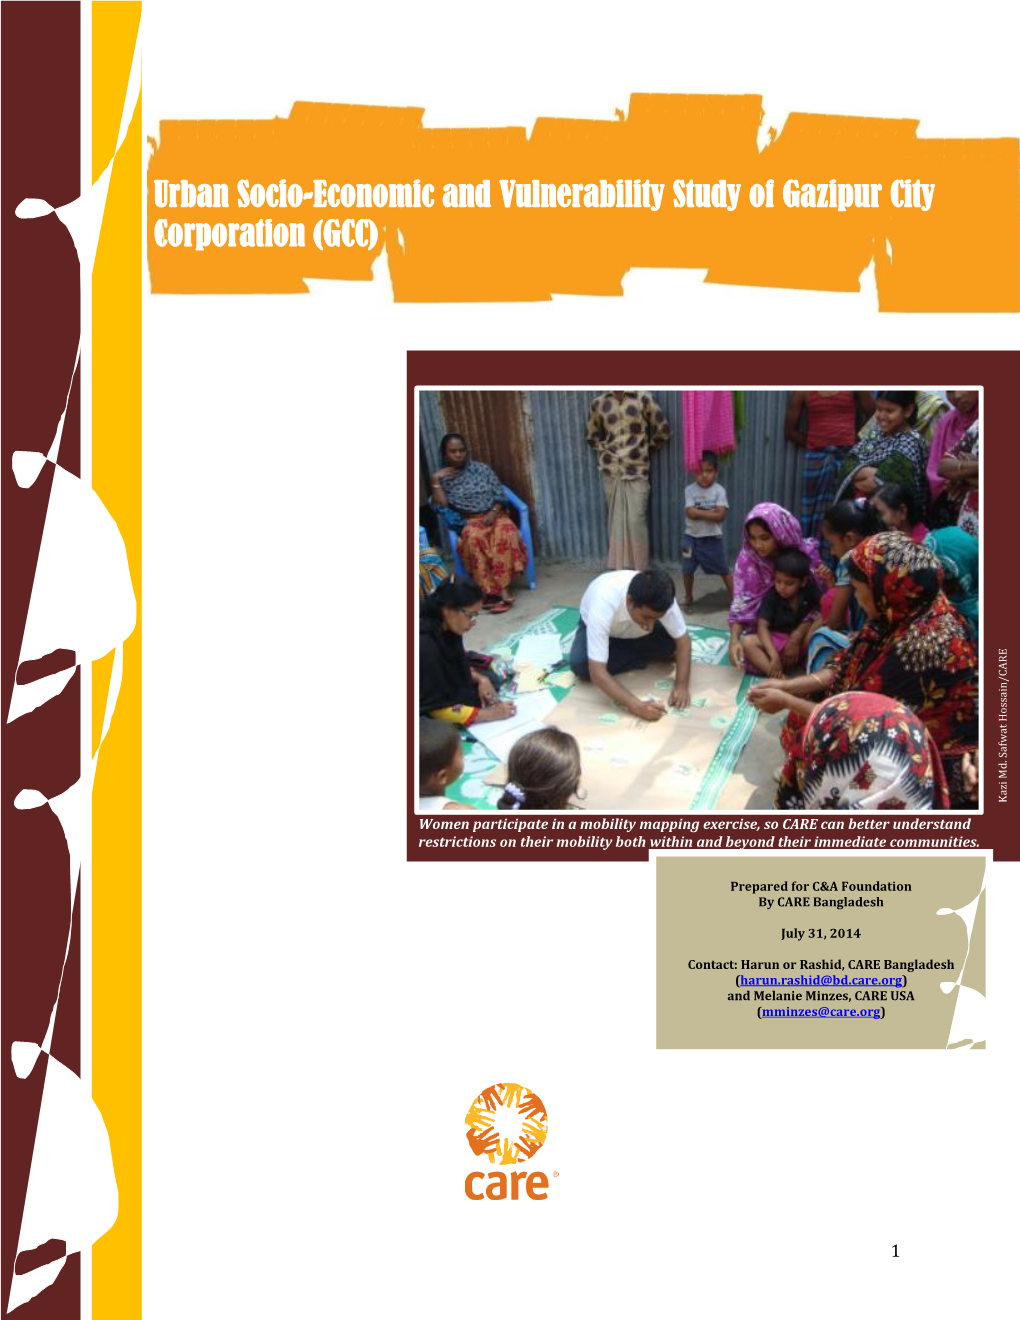 Urban Socio-Economic and Vulnerability Study of Gazipur City Corporation (GCC)